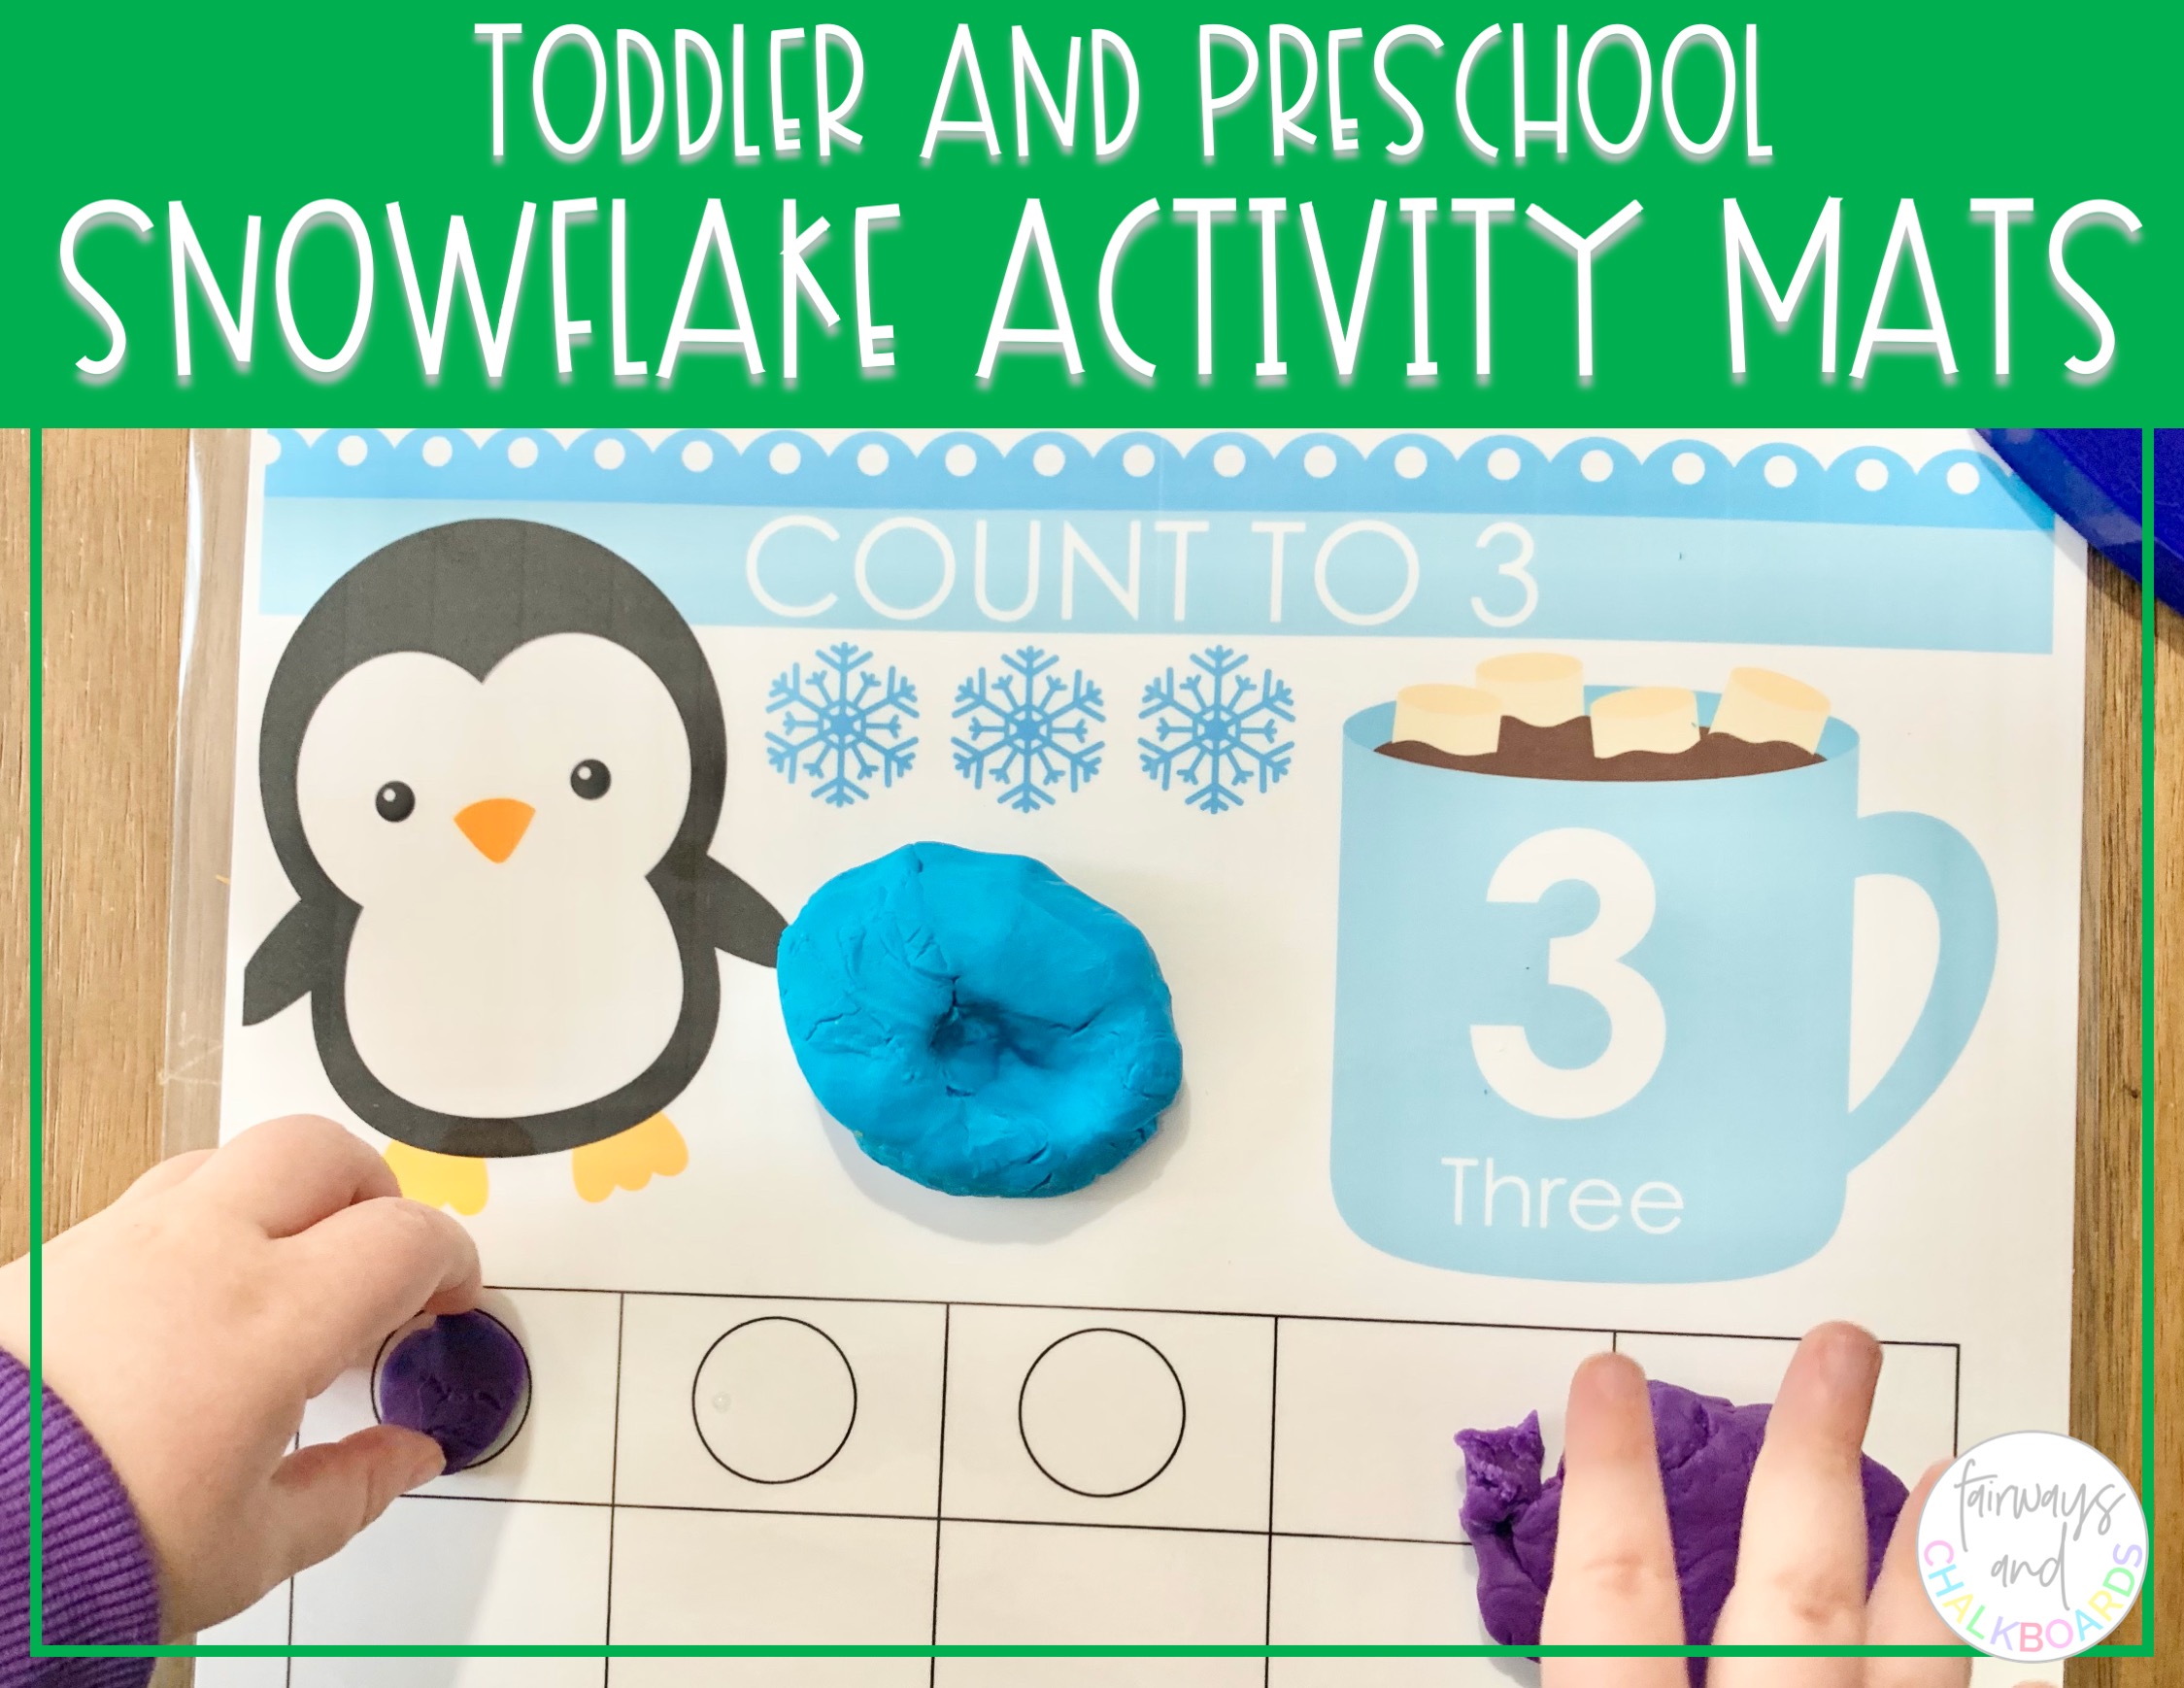 Snowflake Activity Mats | Preschool Learning Activities's featured image